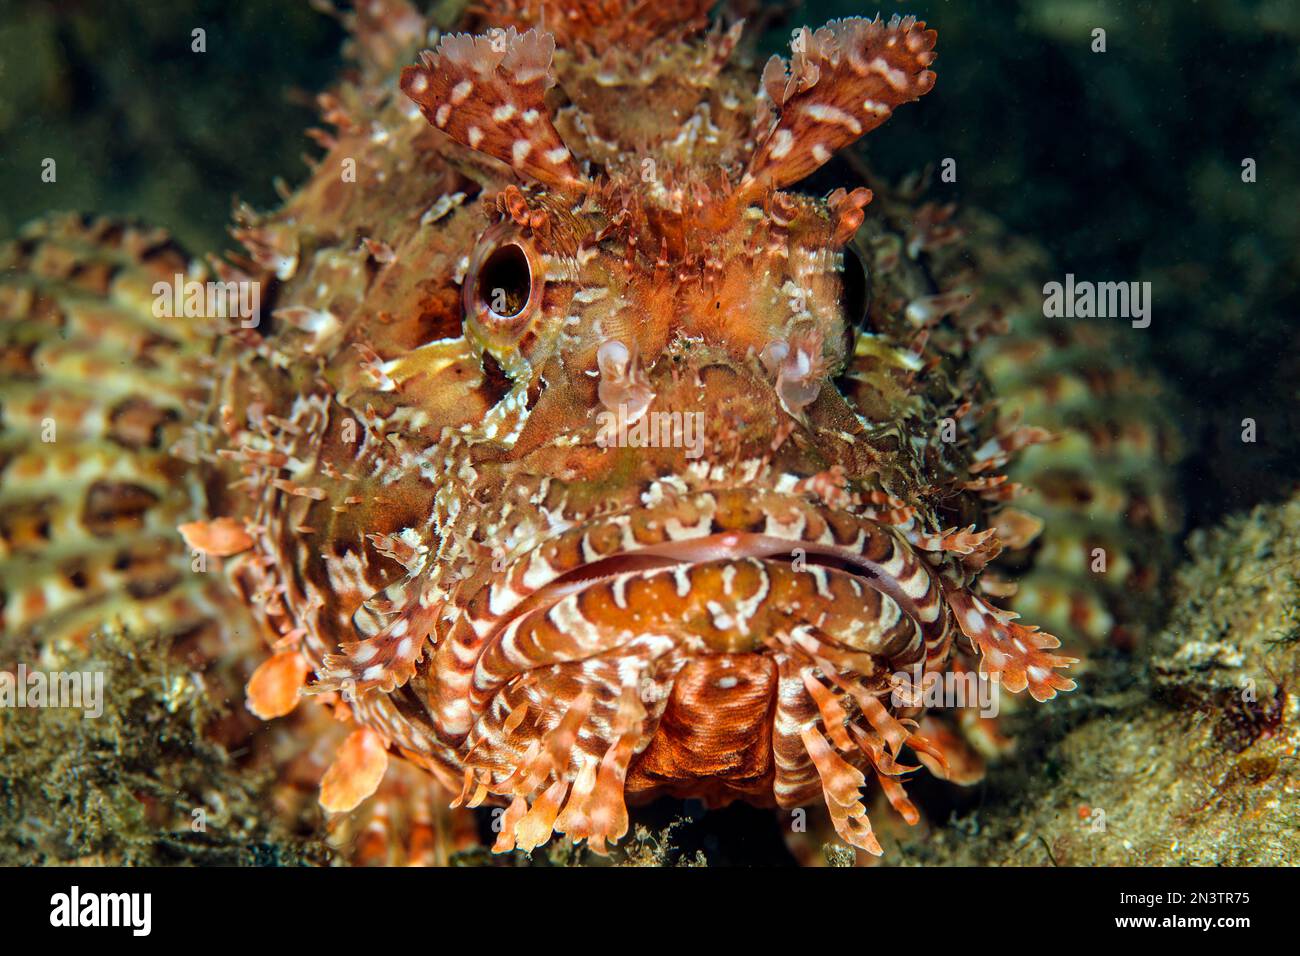 Close-up frontal view of head of red scorpionfish (Scorpaena scrofa), Mediterranean Sea, Elba, Tuscany, Italy Stock Photo